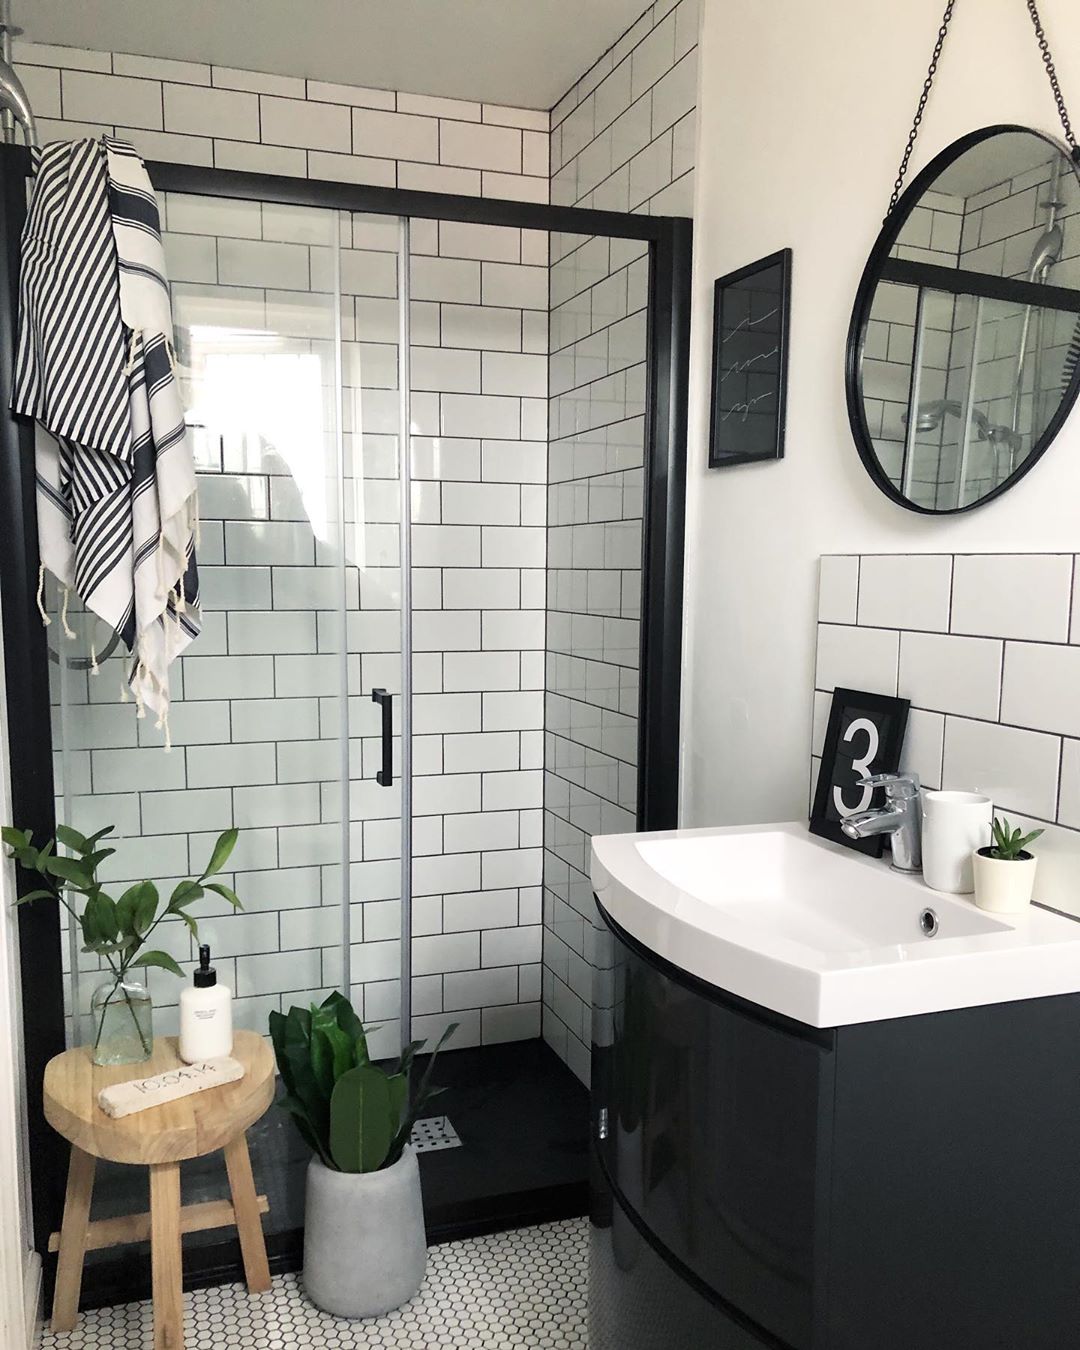 15 Chic Black Bathrooms - Black and White Decorating Ideas